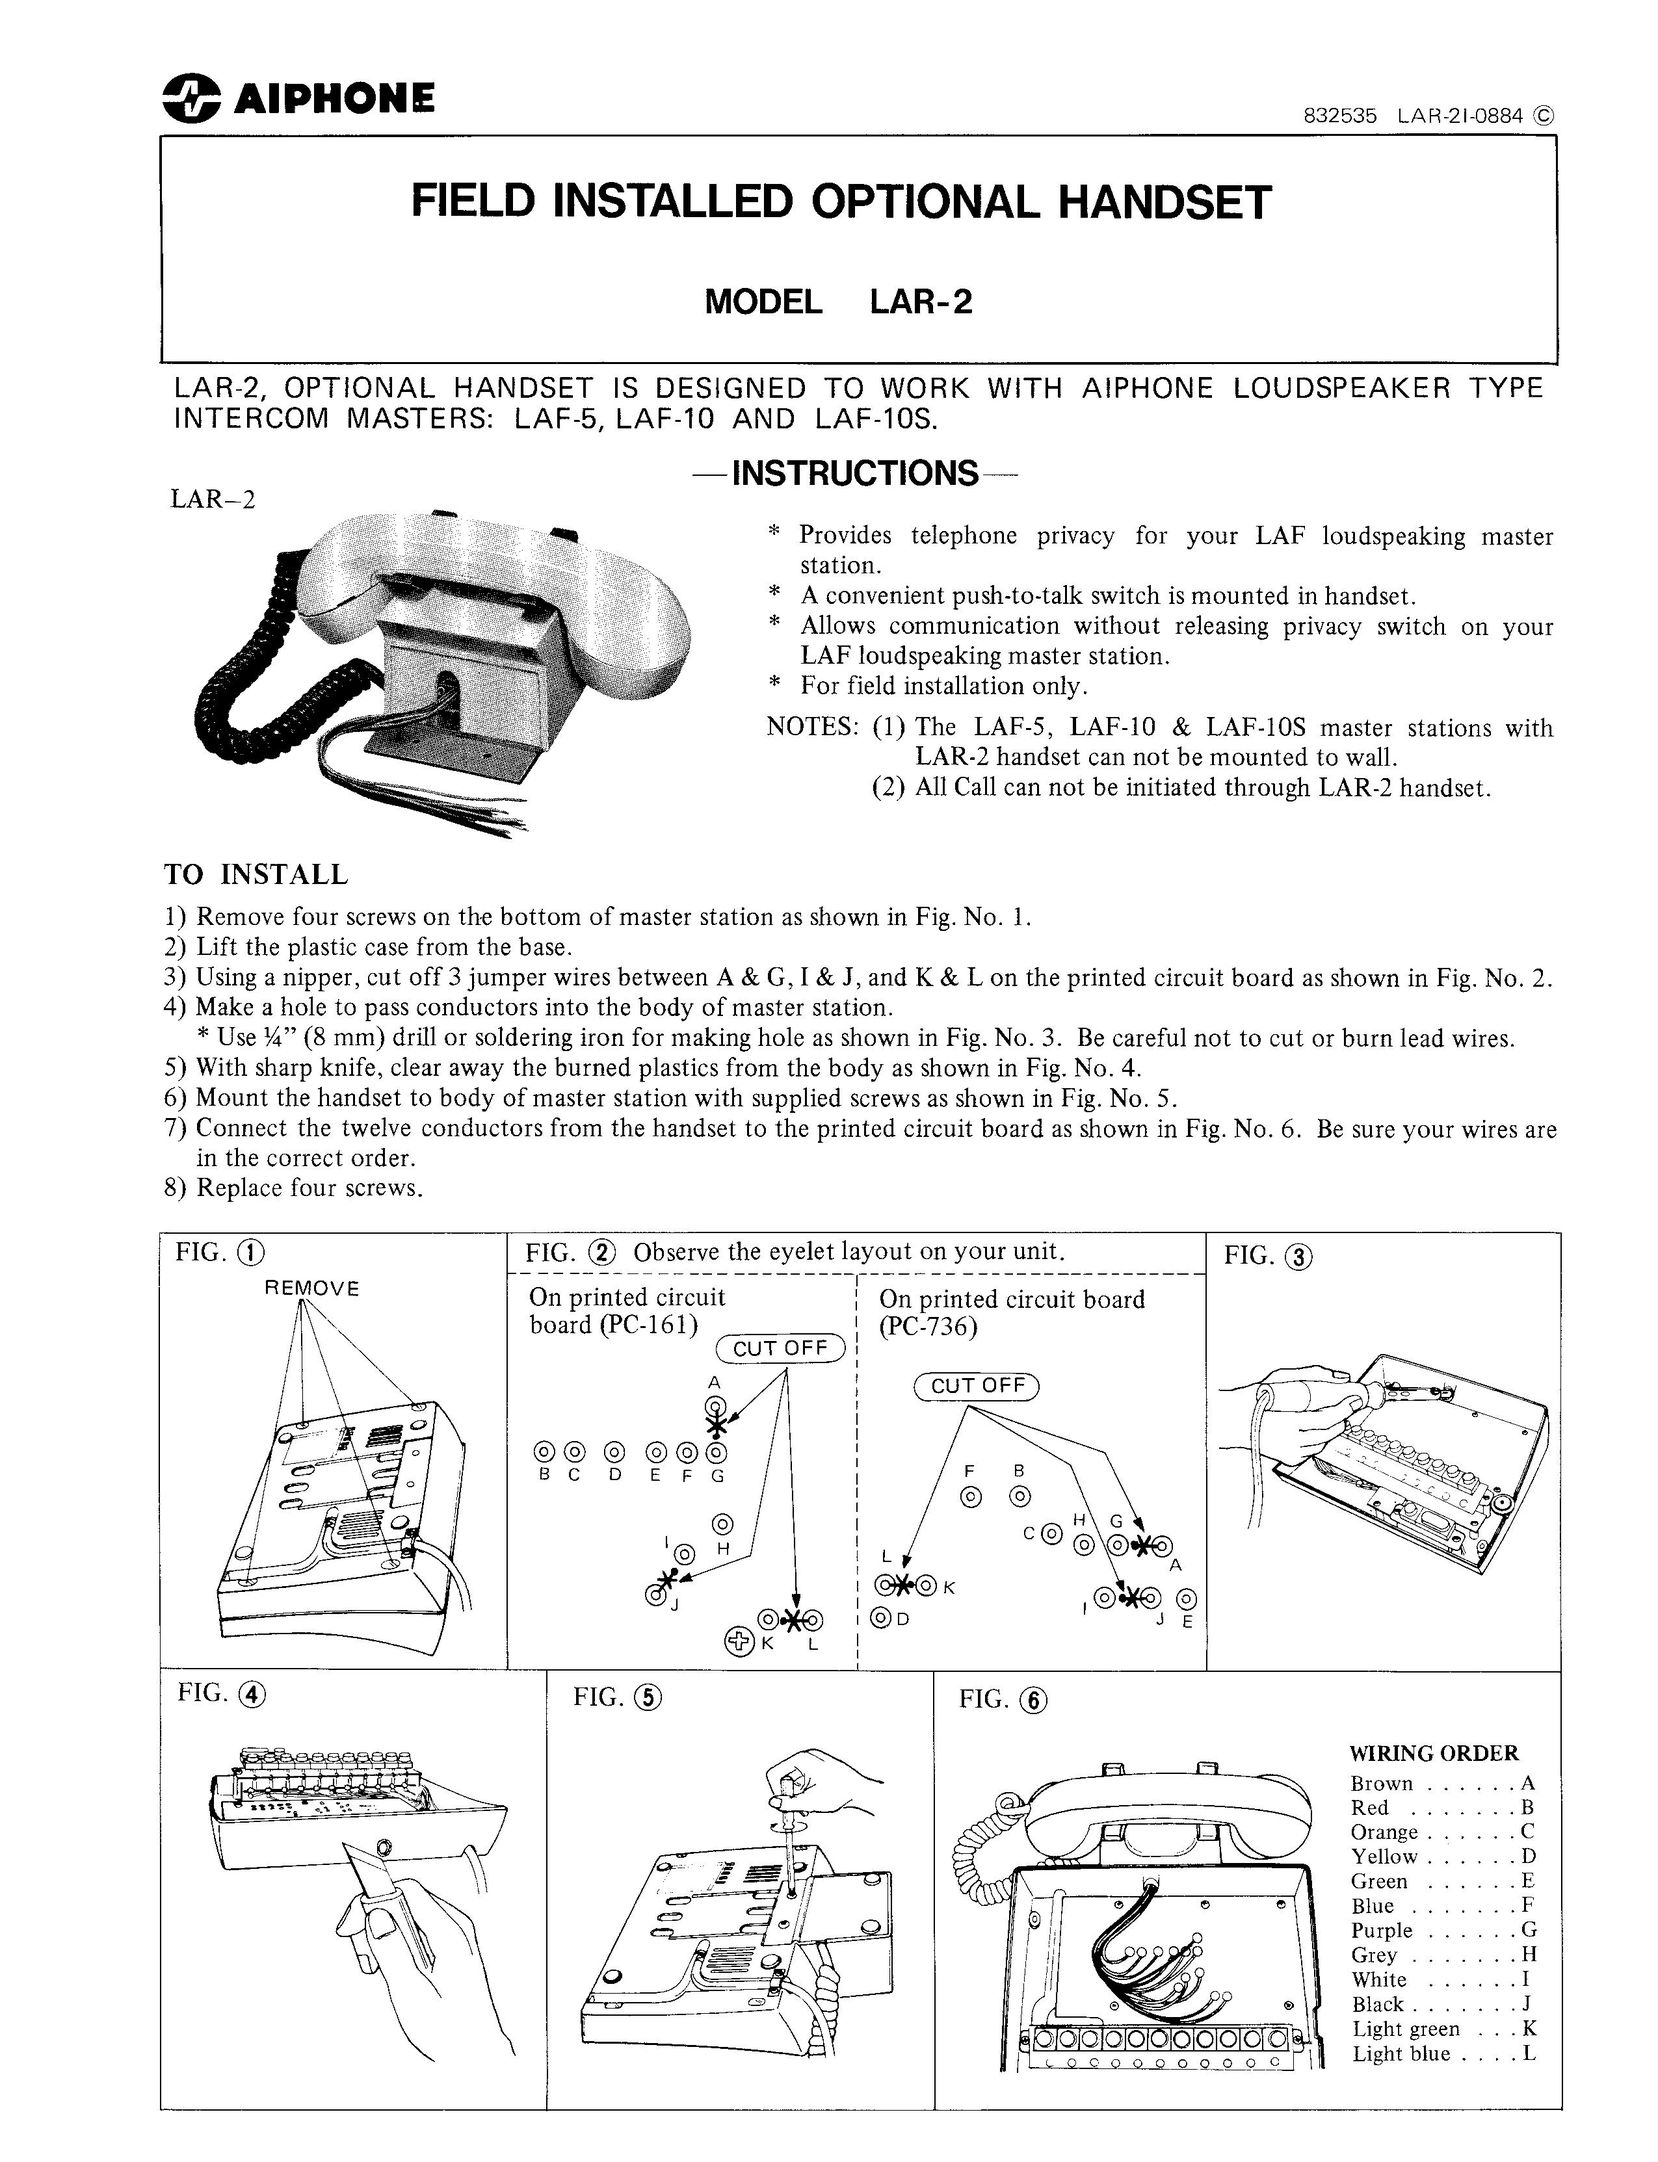 Aiphone LAR-2 Telephone User Manual